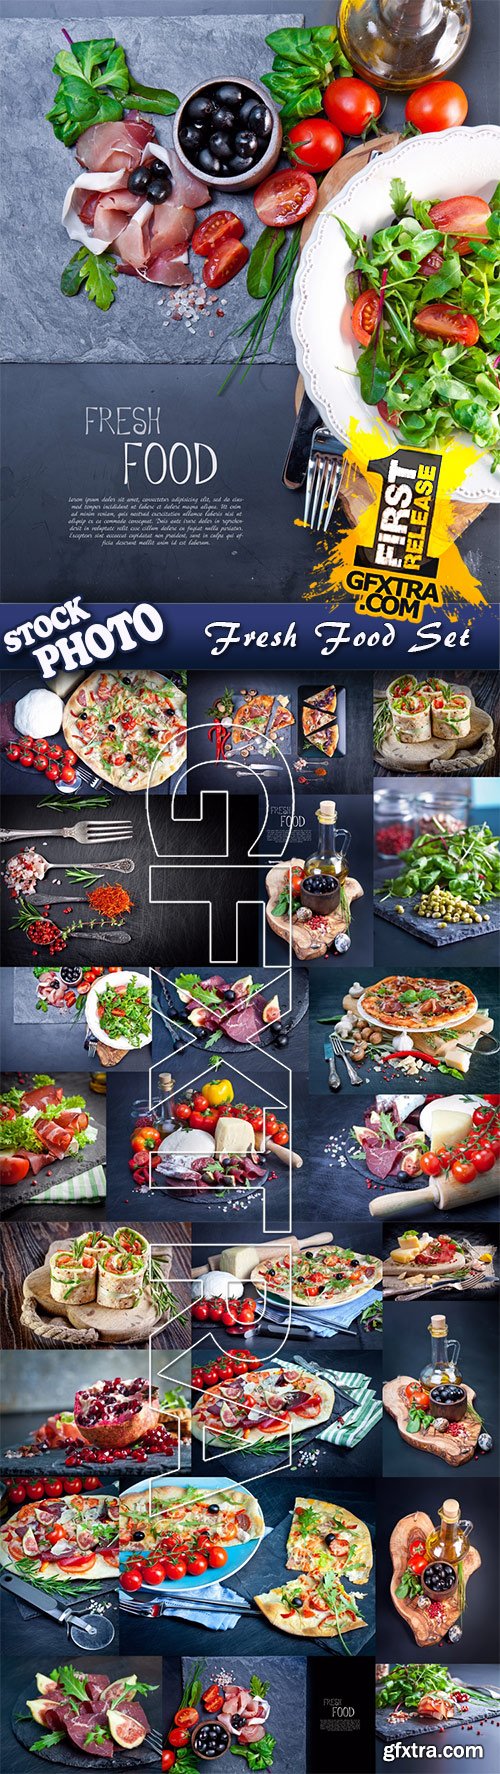 Stock Photo - Fresh Food Set, 25JPG